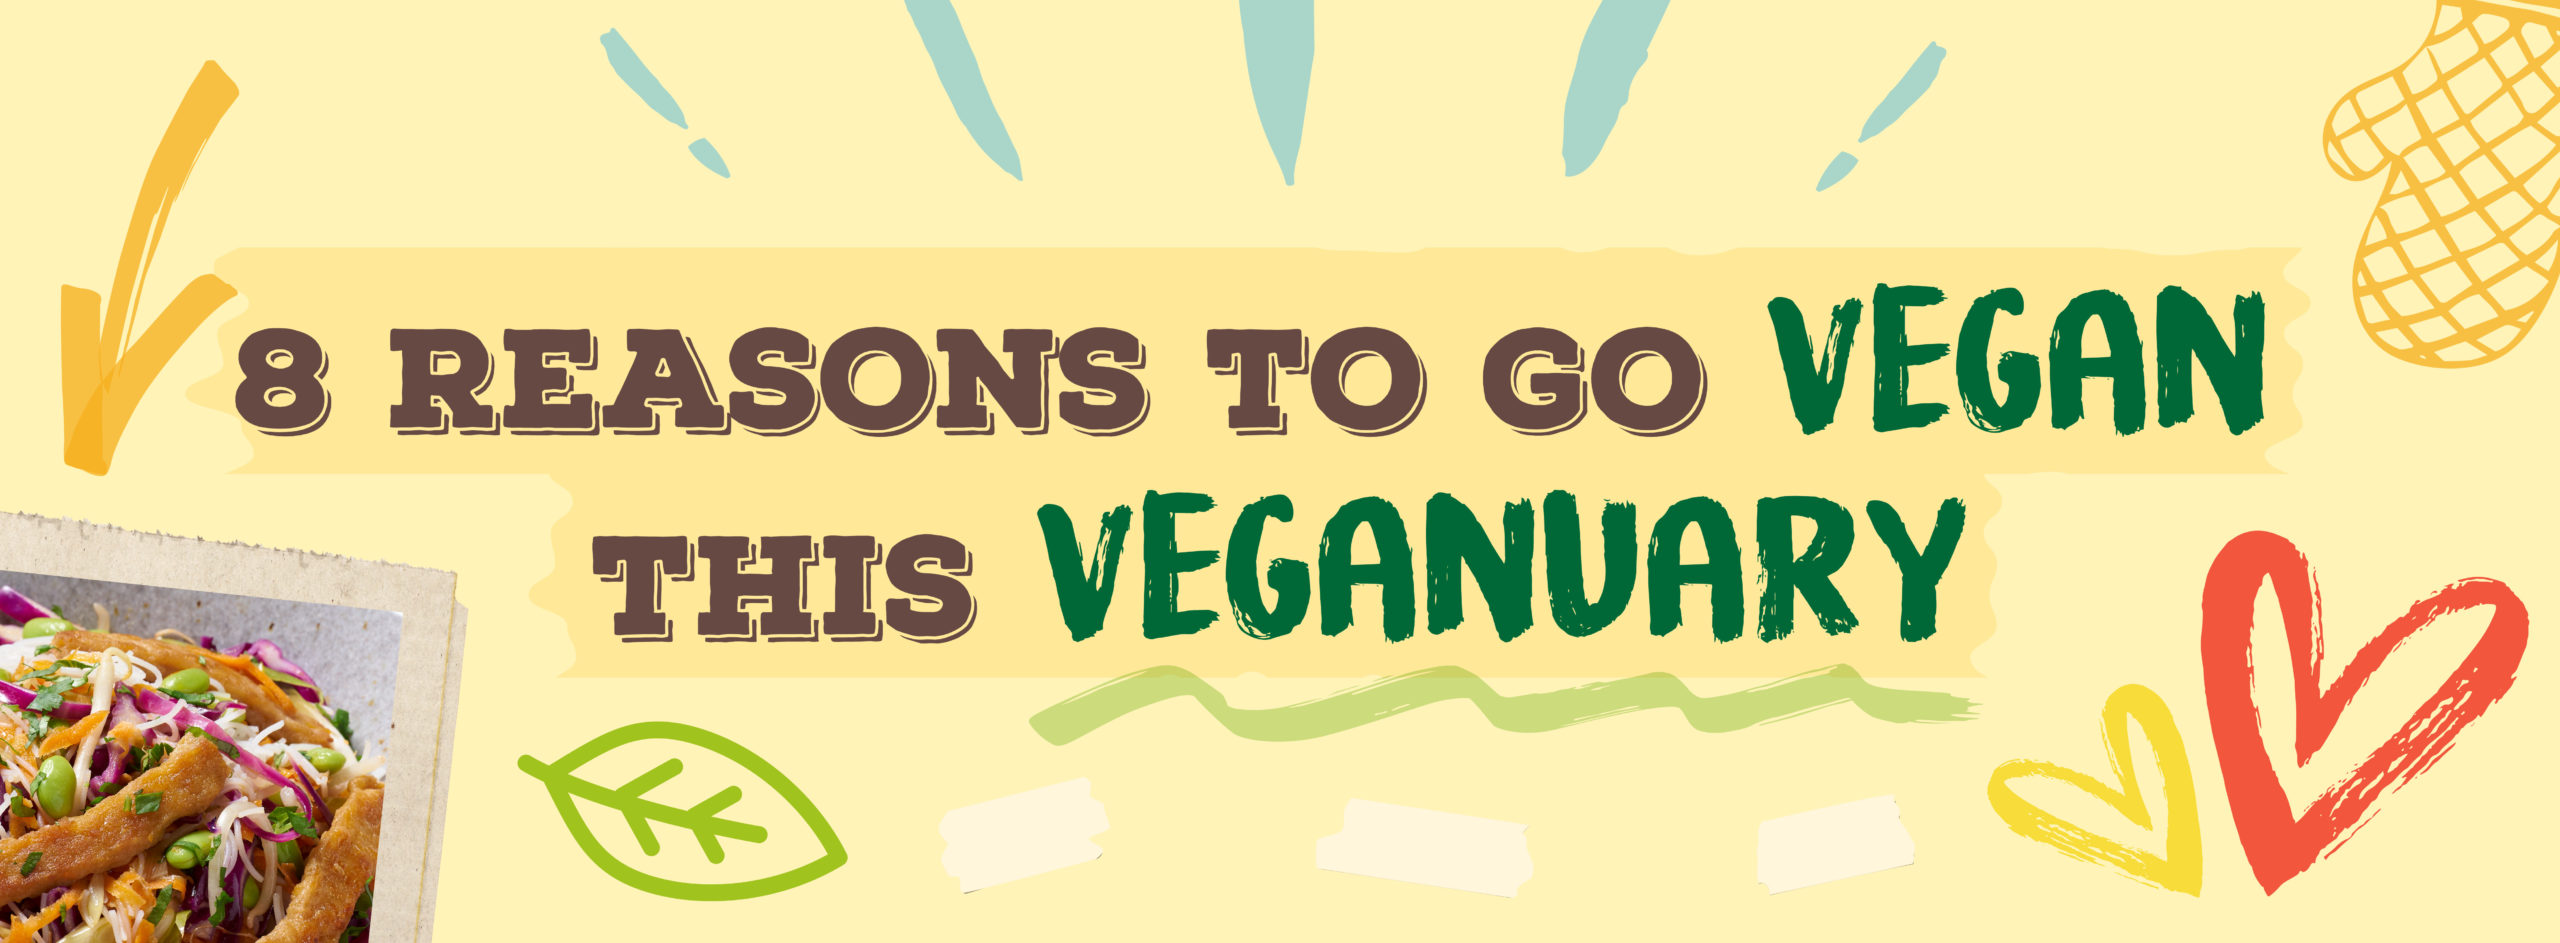 8 Reasons to go vegan this Veganuary - Fry Family Food AU